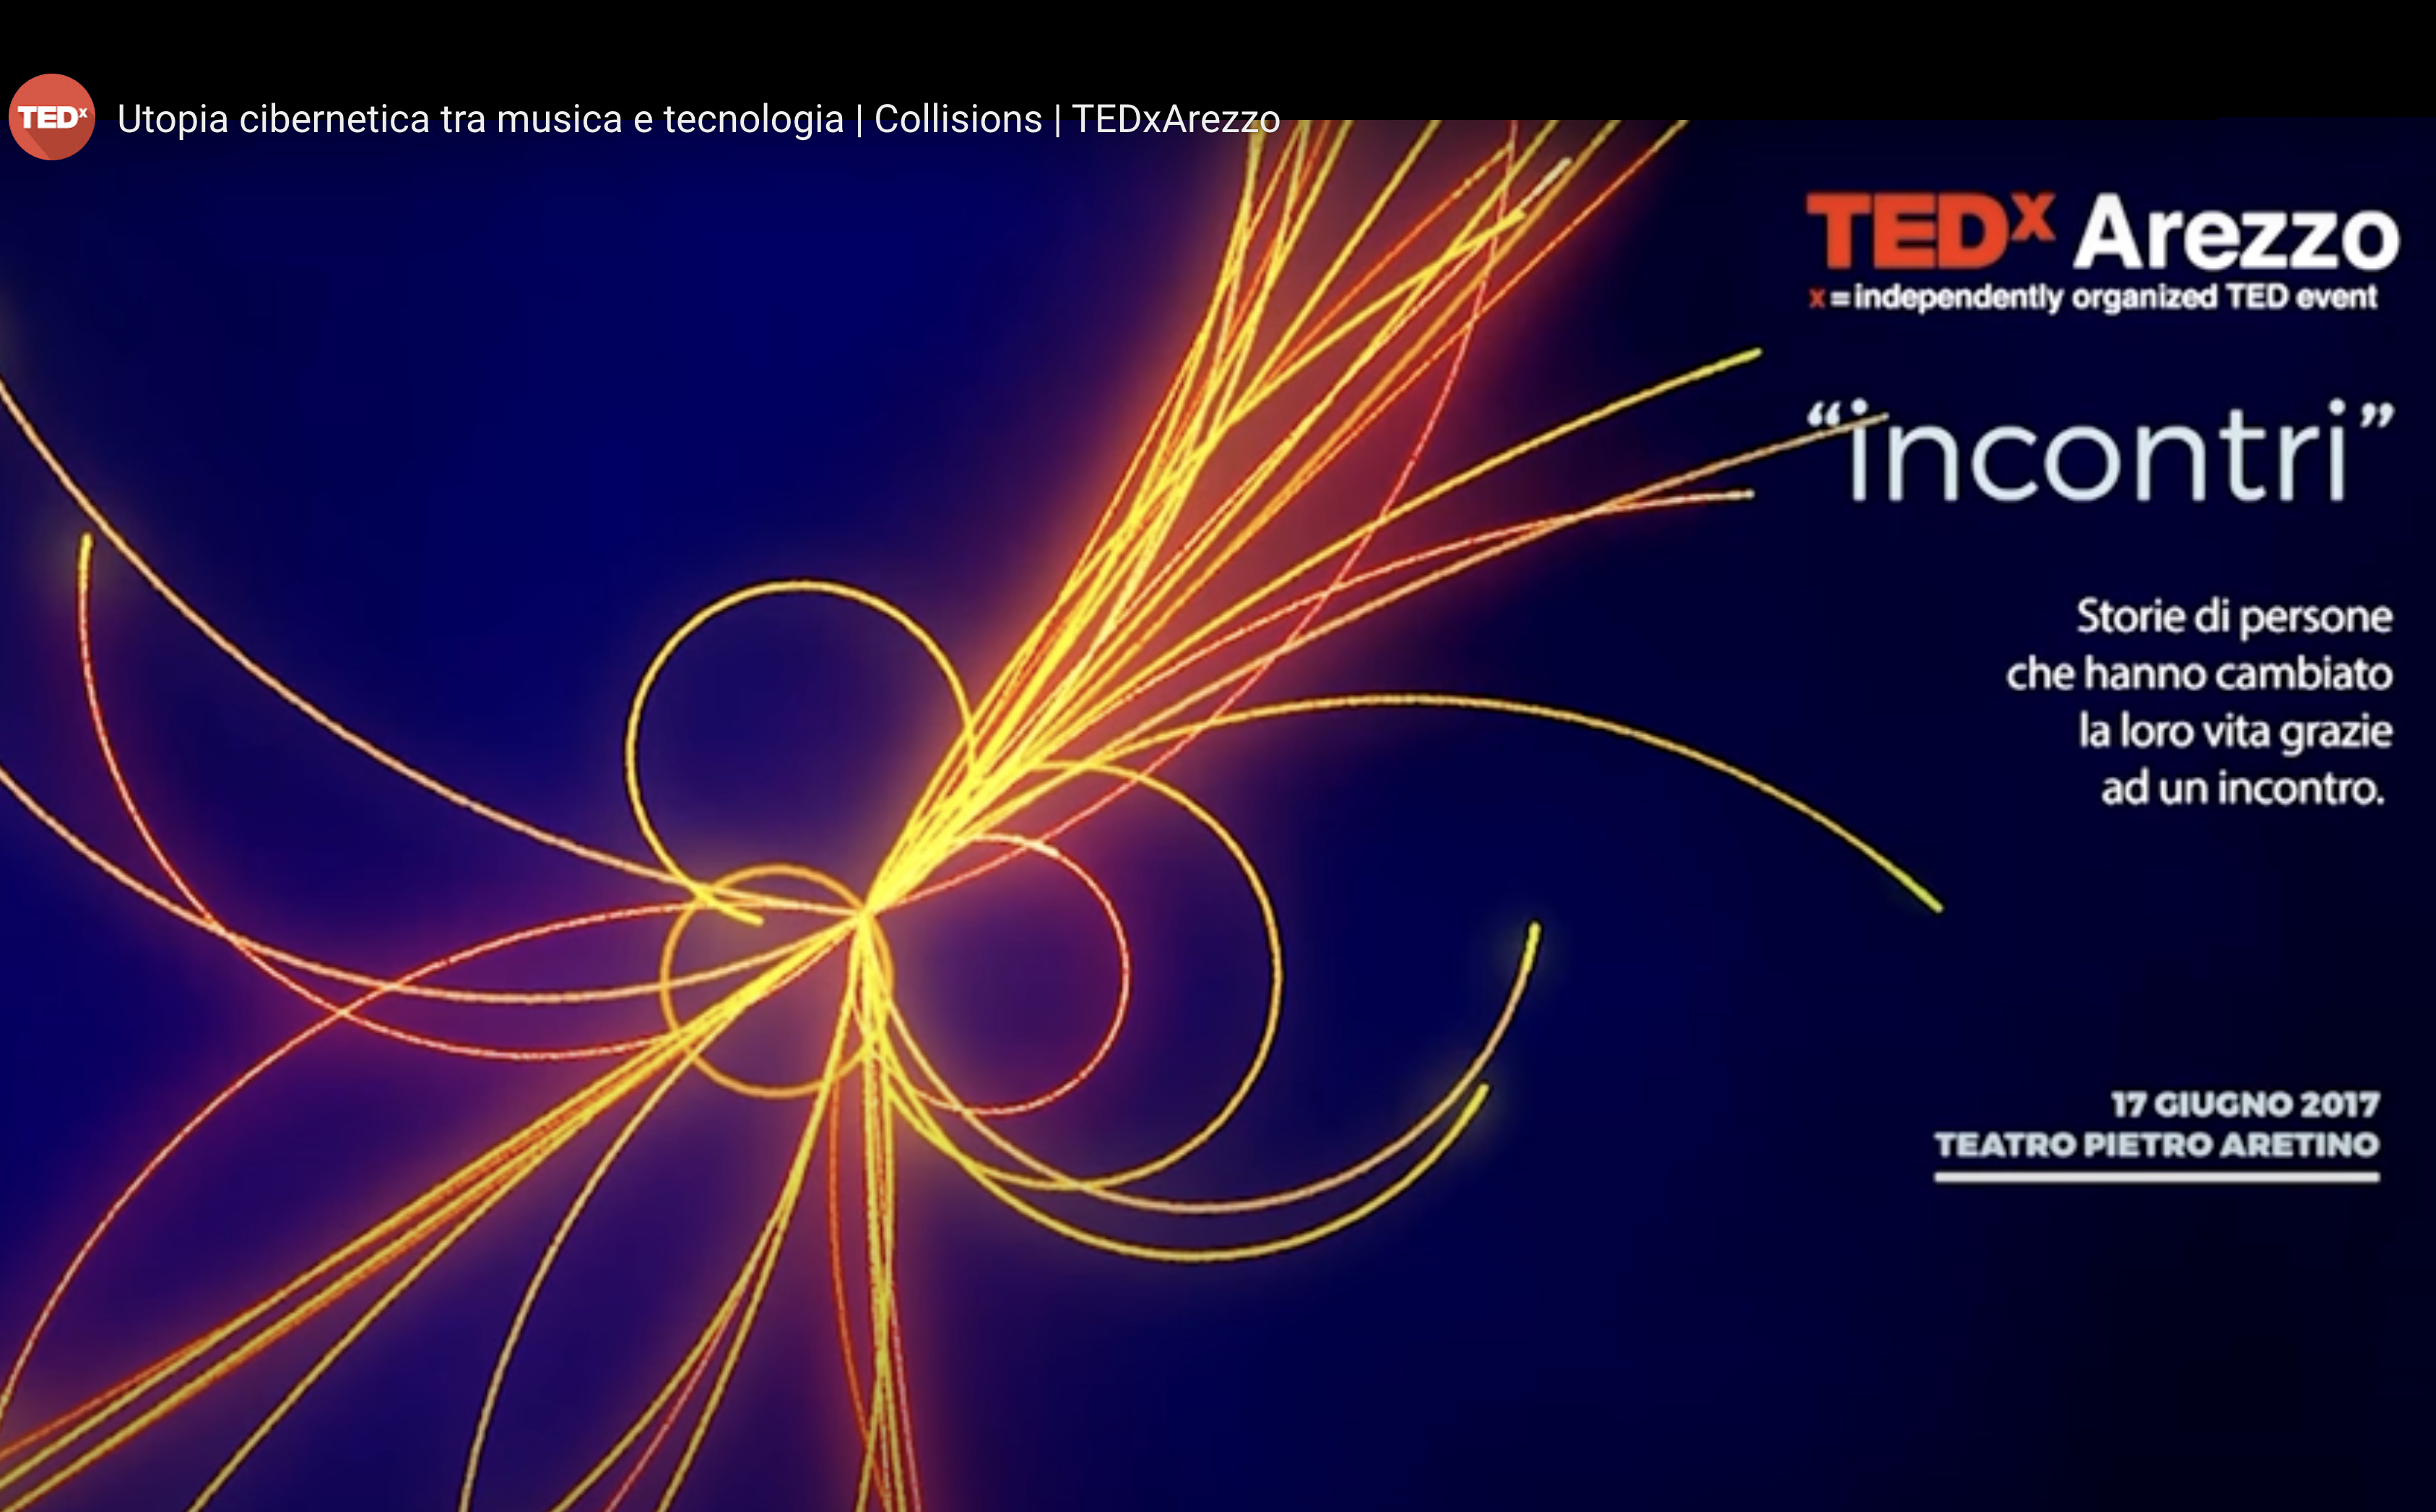 TedxArezzo